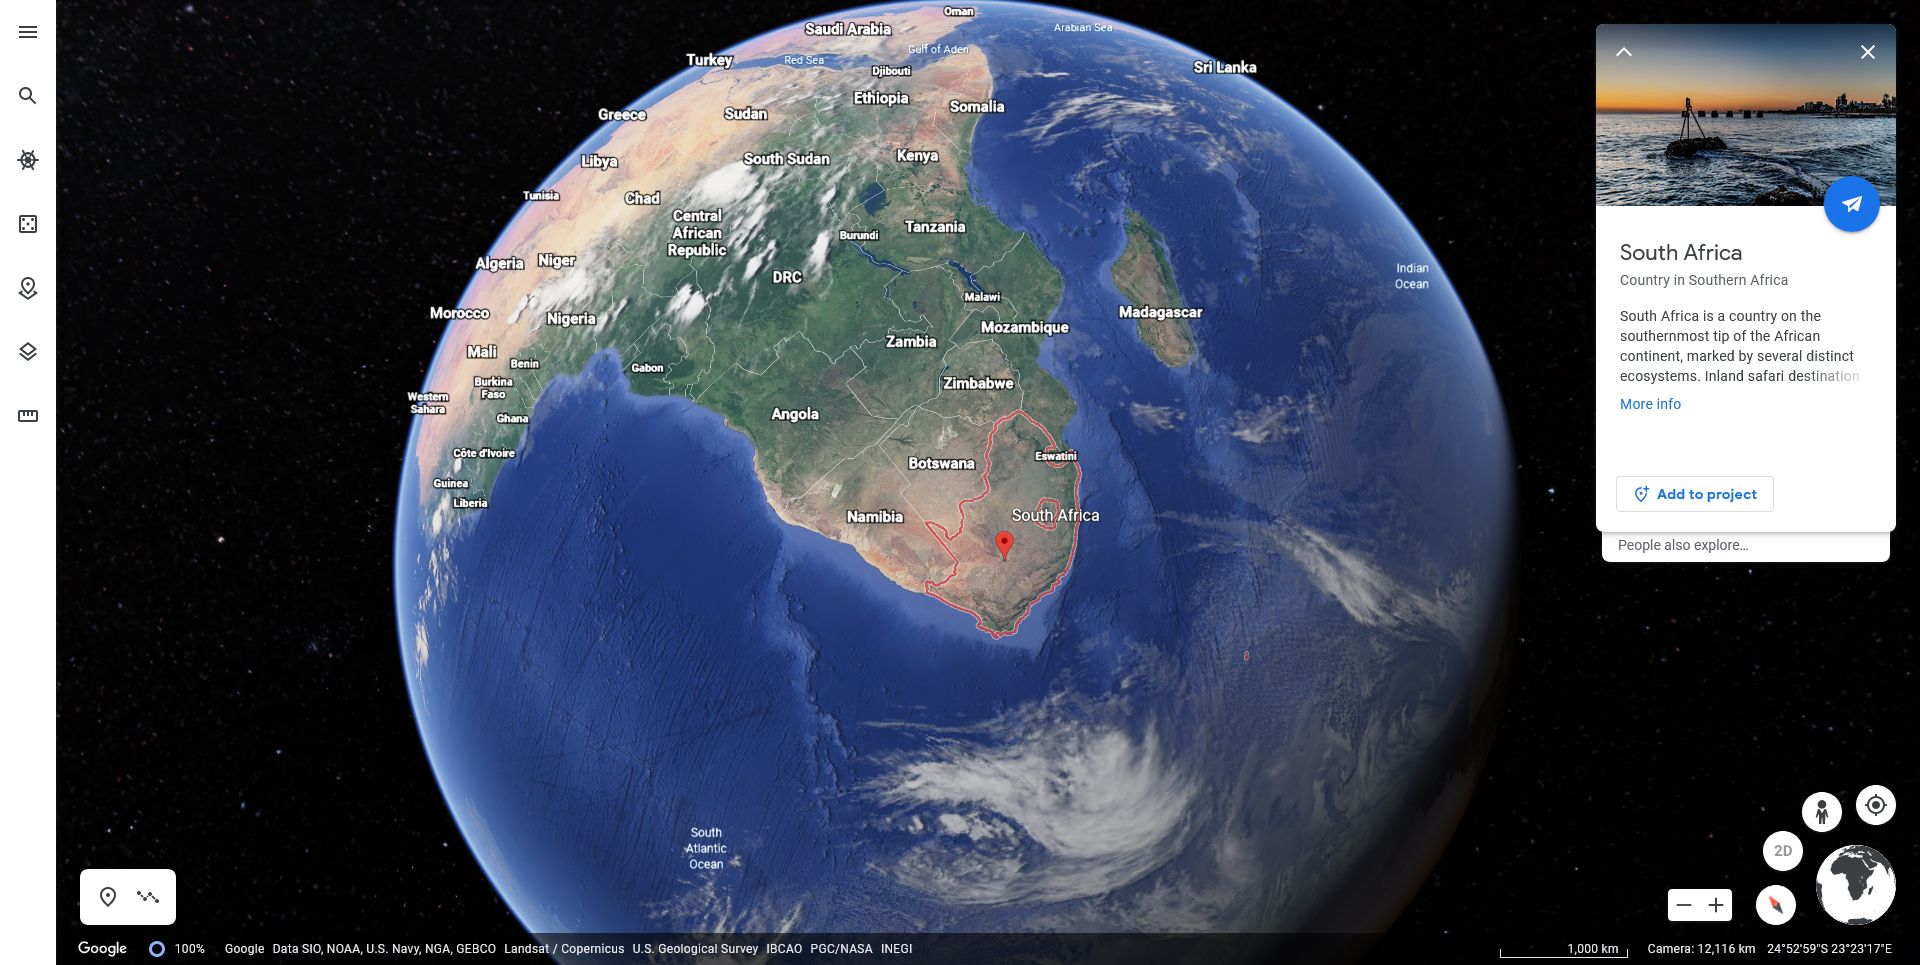 google earth 5.0 on mobile